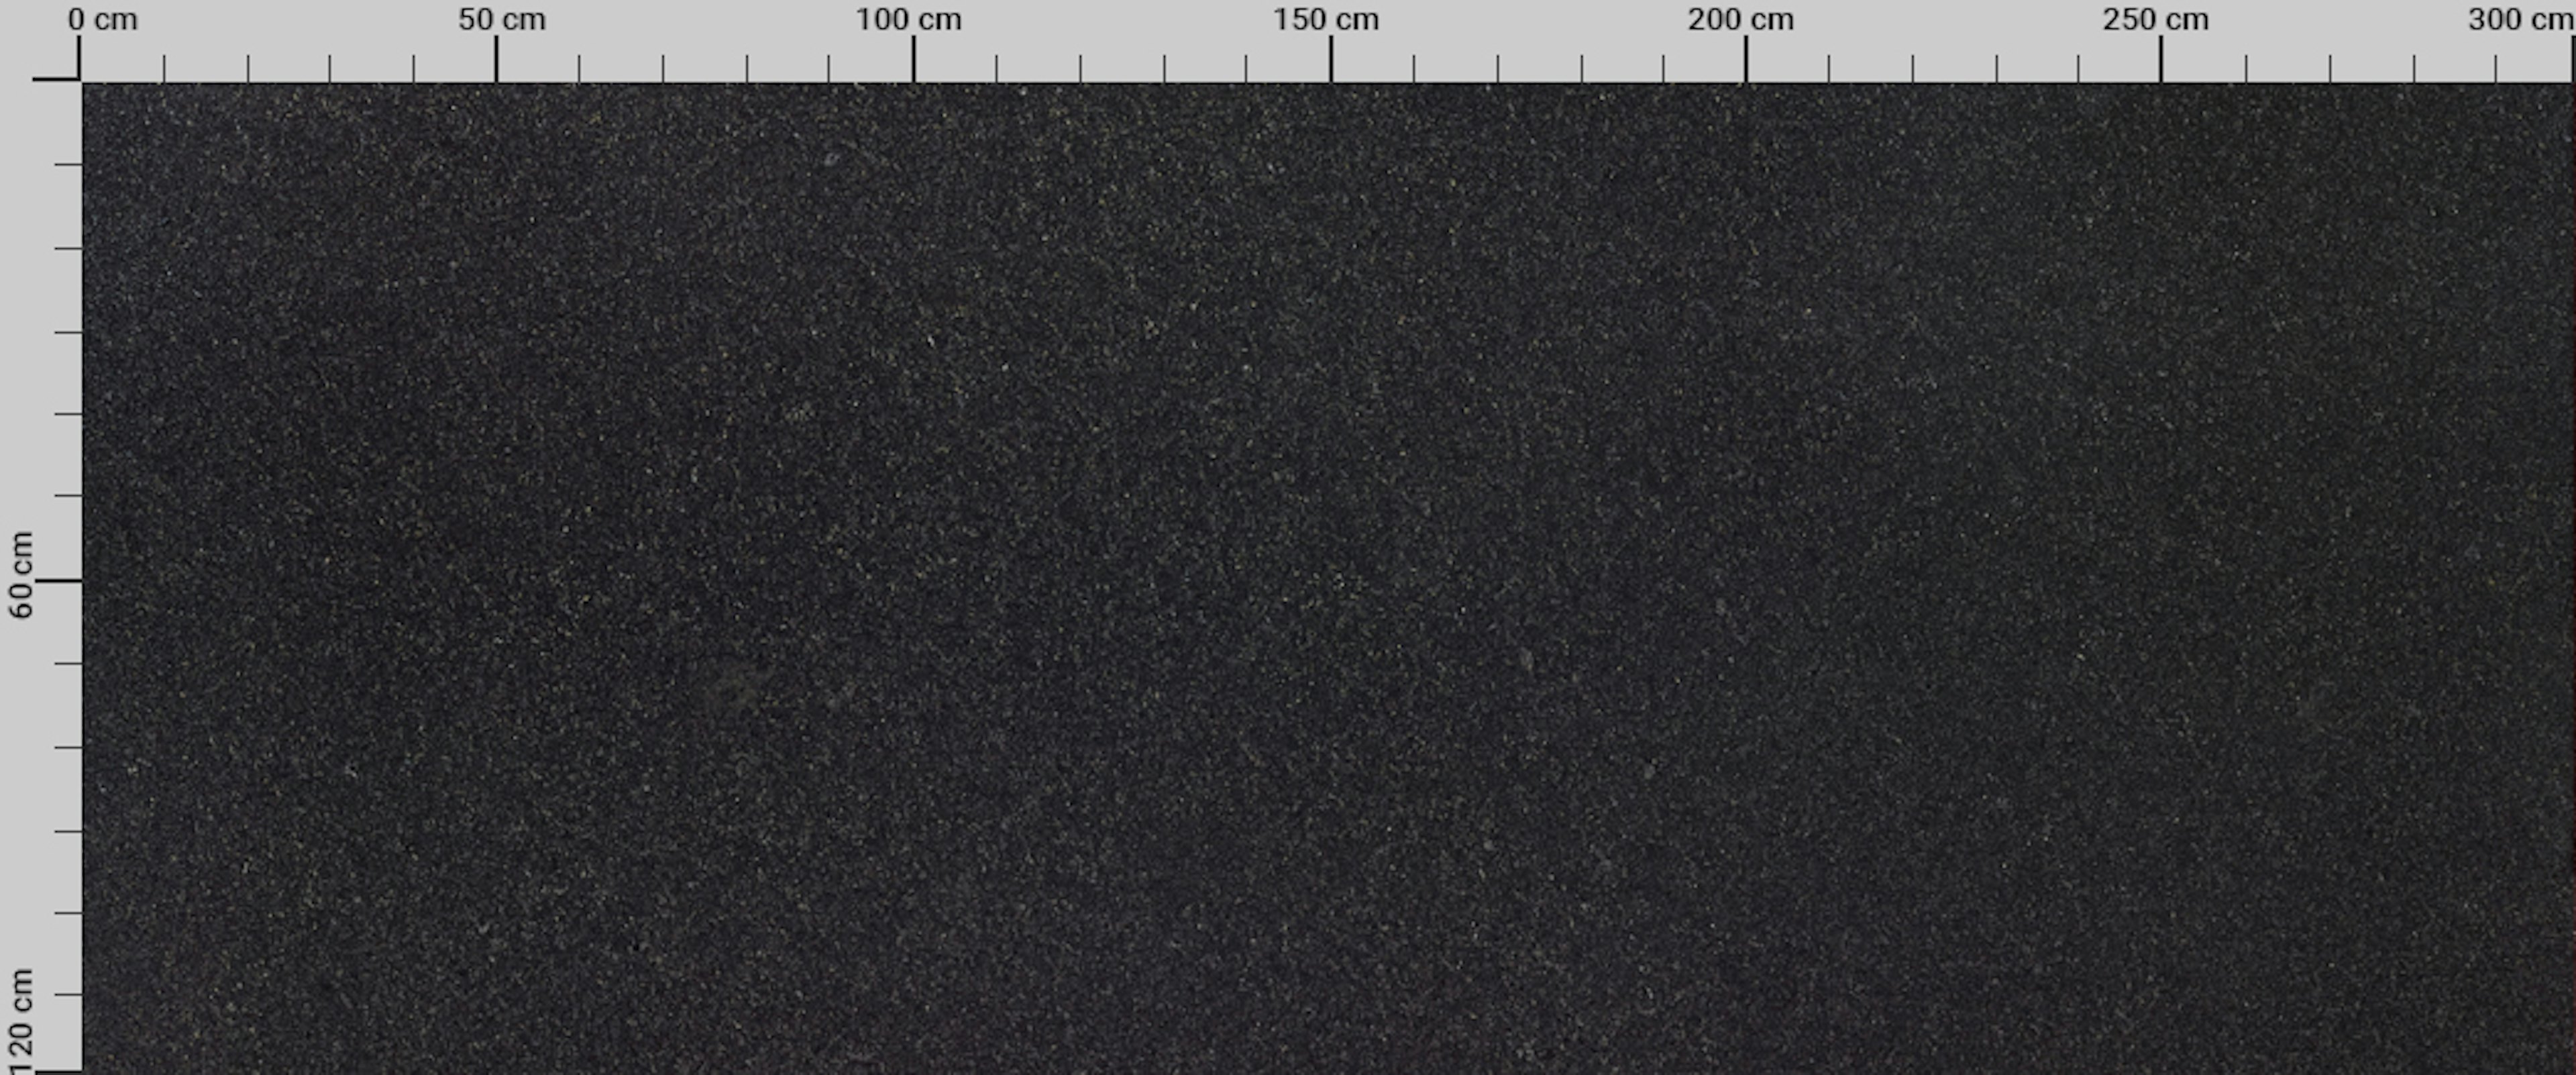 Graniet keukenblad Black label (P)